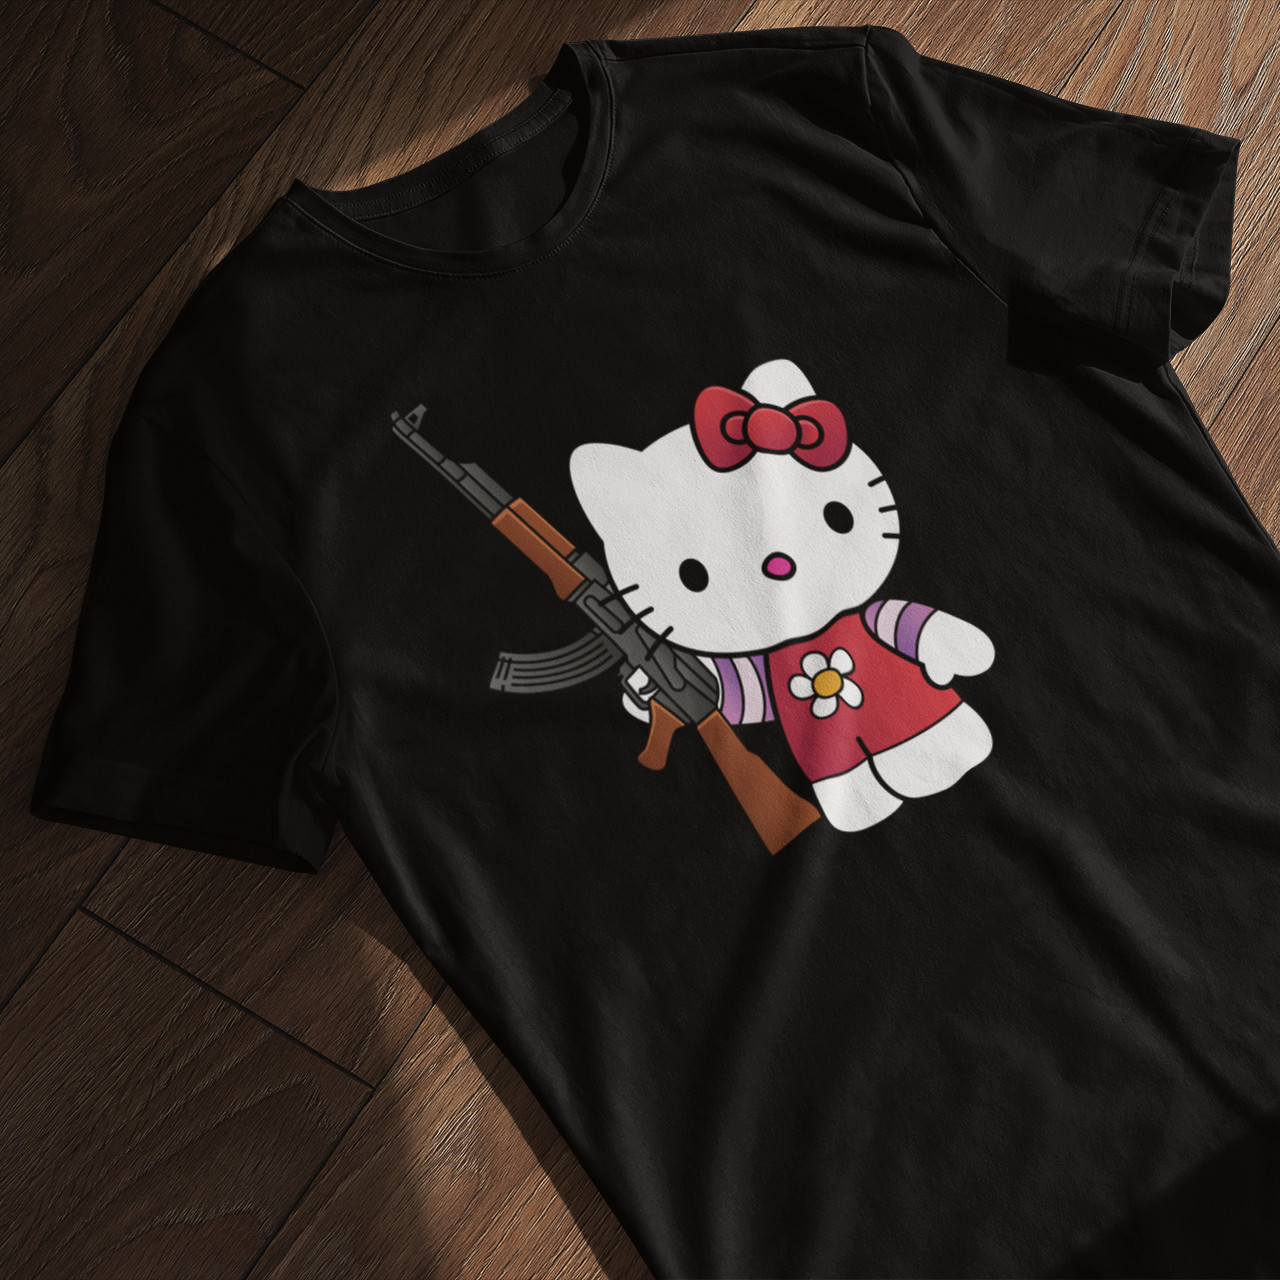 Hello Kitty • T-shirt Black